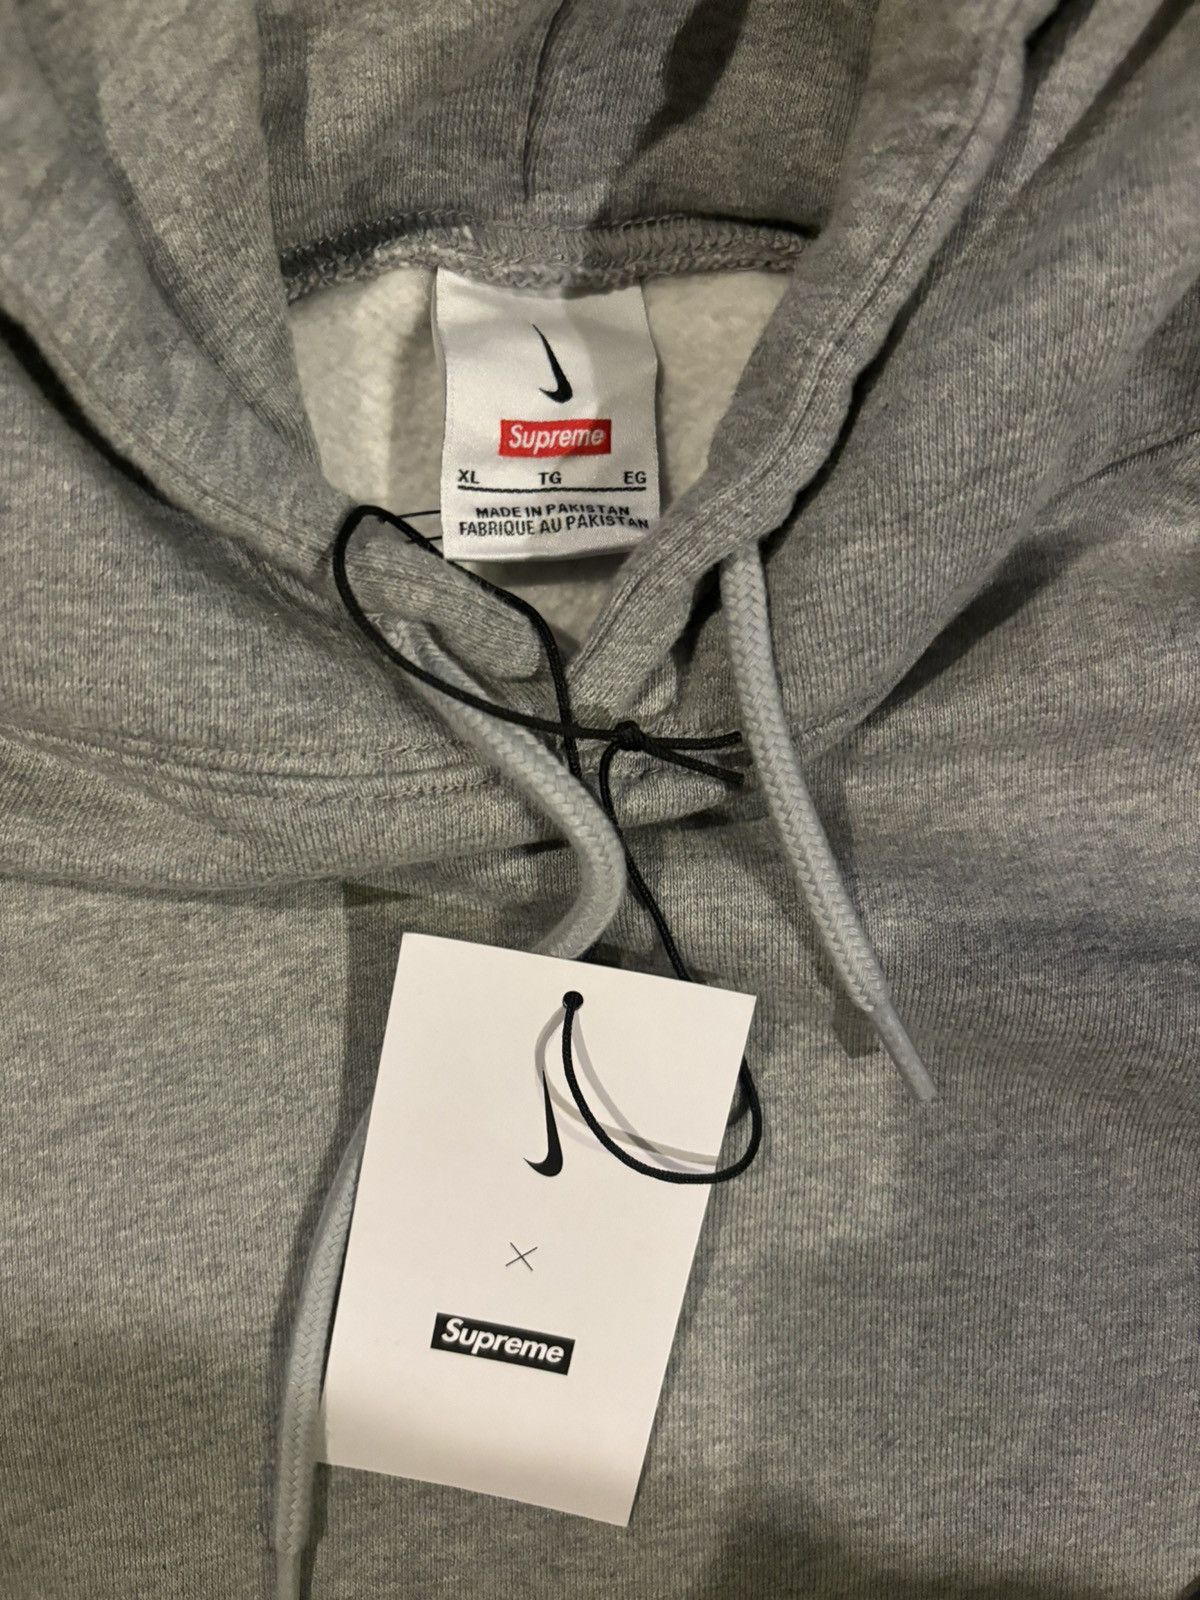 Supreme Supreme x Nike Hooded Sweatshirt Heather Grey | Grailed